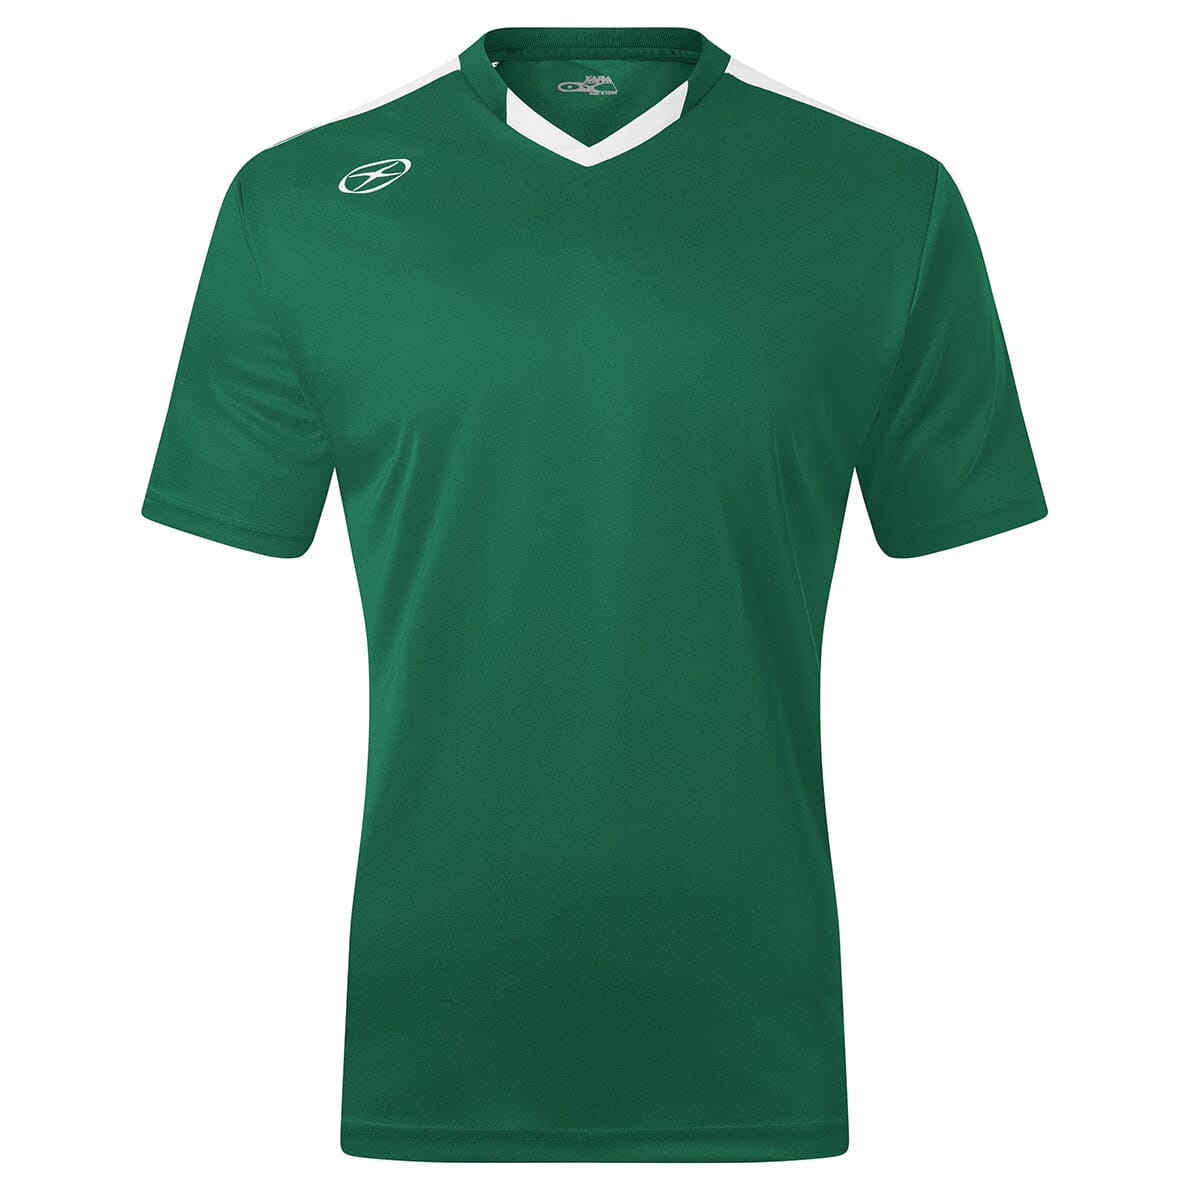 Britannia Jersey - Home Colors - Male Shirt Xara Soccer Hunter/White Youth Medium 